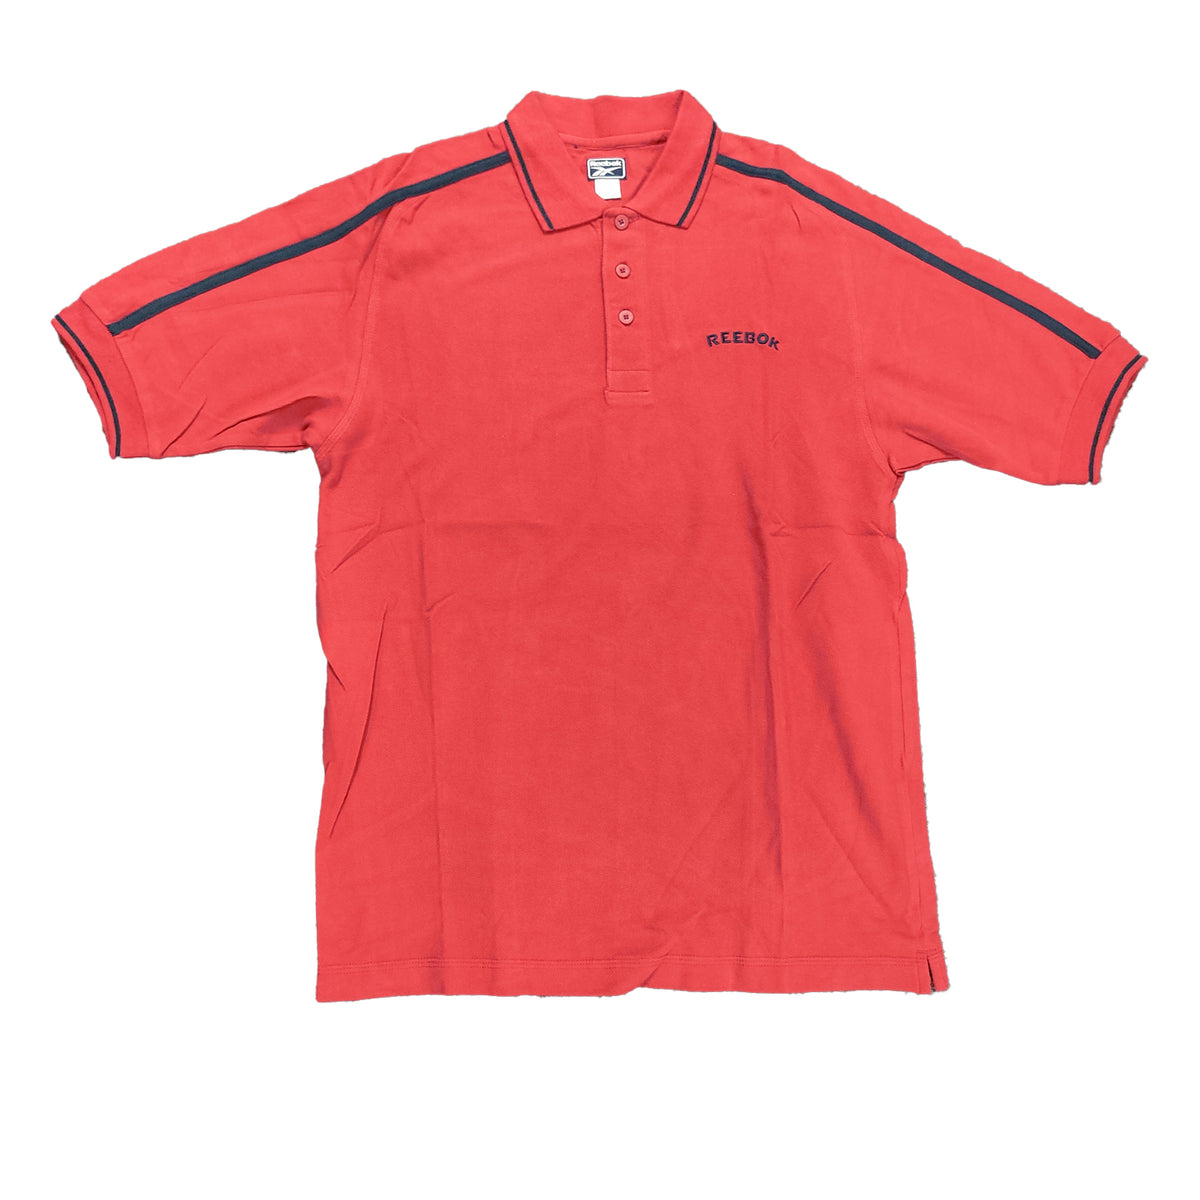 Reebok Mens Clearance One Line Red Polo Shirt - Medium